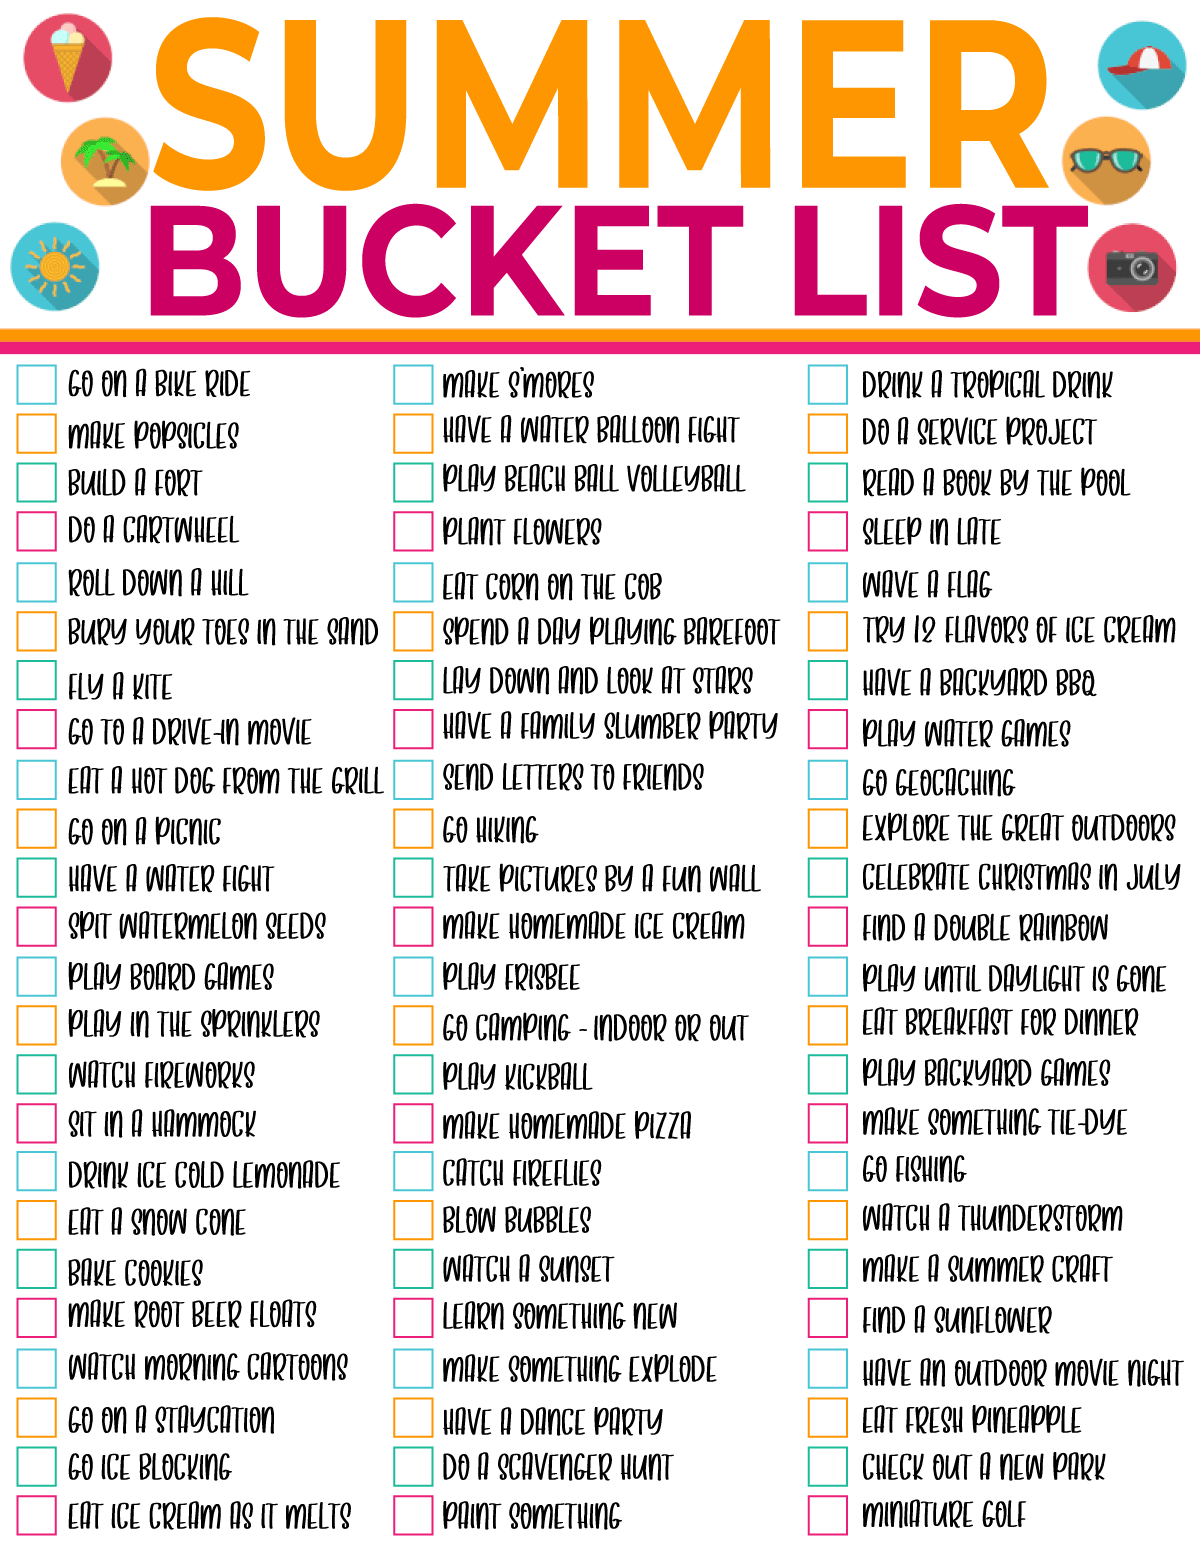 The Ultimate Summer Bucket List: 50 Fun Summer Activities For Adults   Ultimate summer bucket list, Fun summer activities, Summer bucket lists